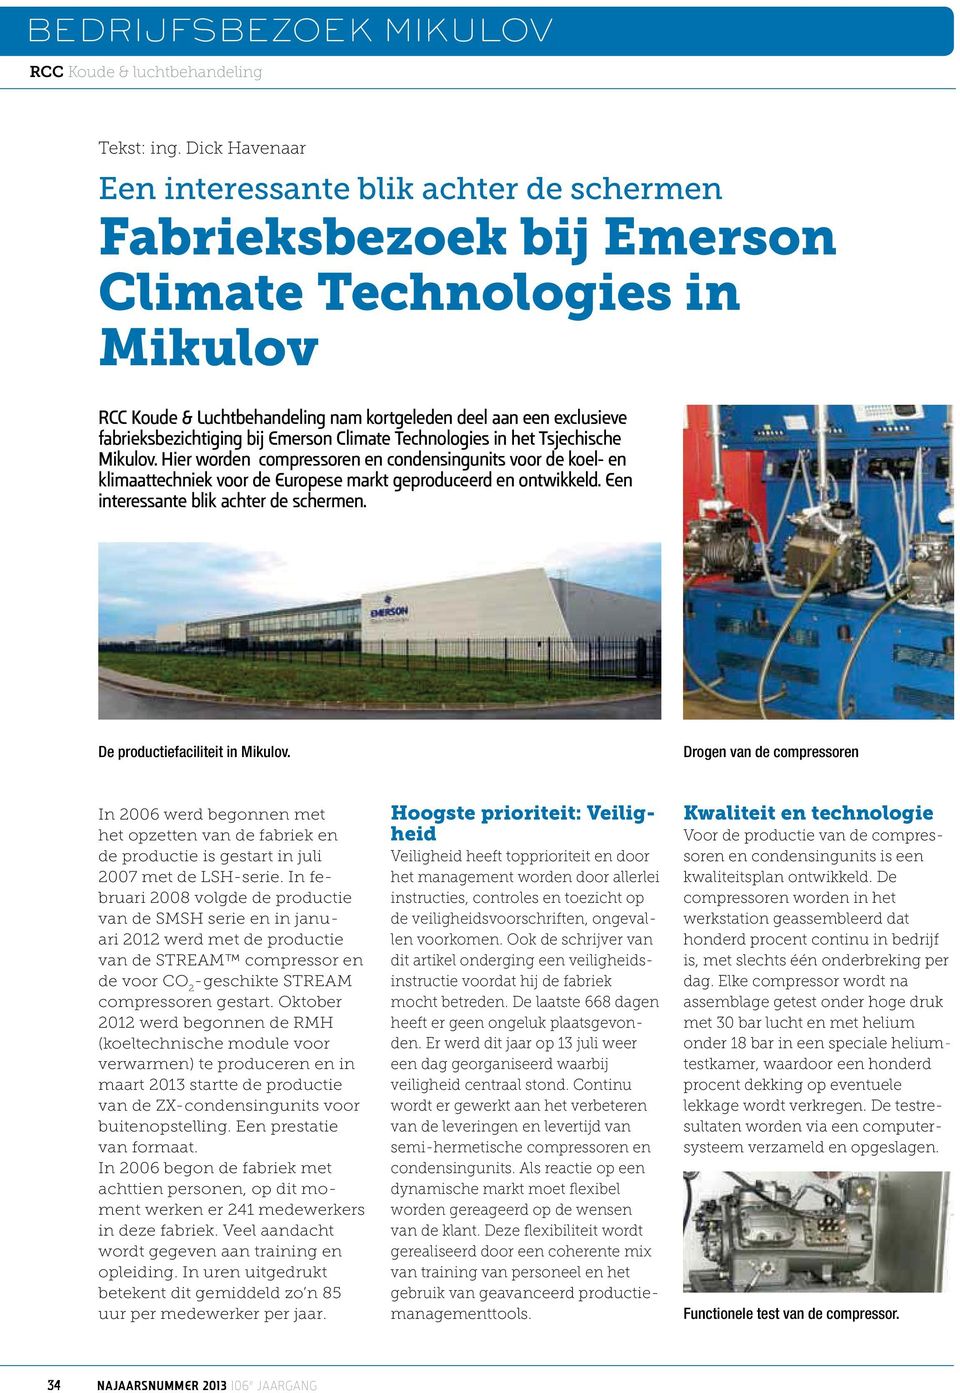 fabrieksbezichtiging bij Emerson Climate Technologies in het Tsjechische Mikulov.